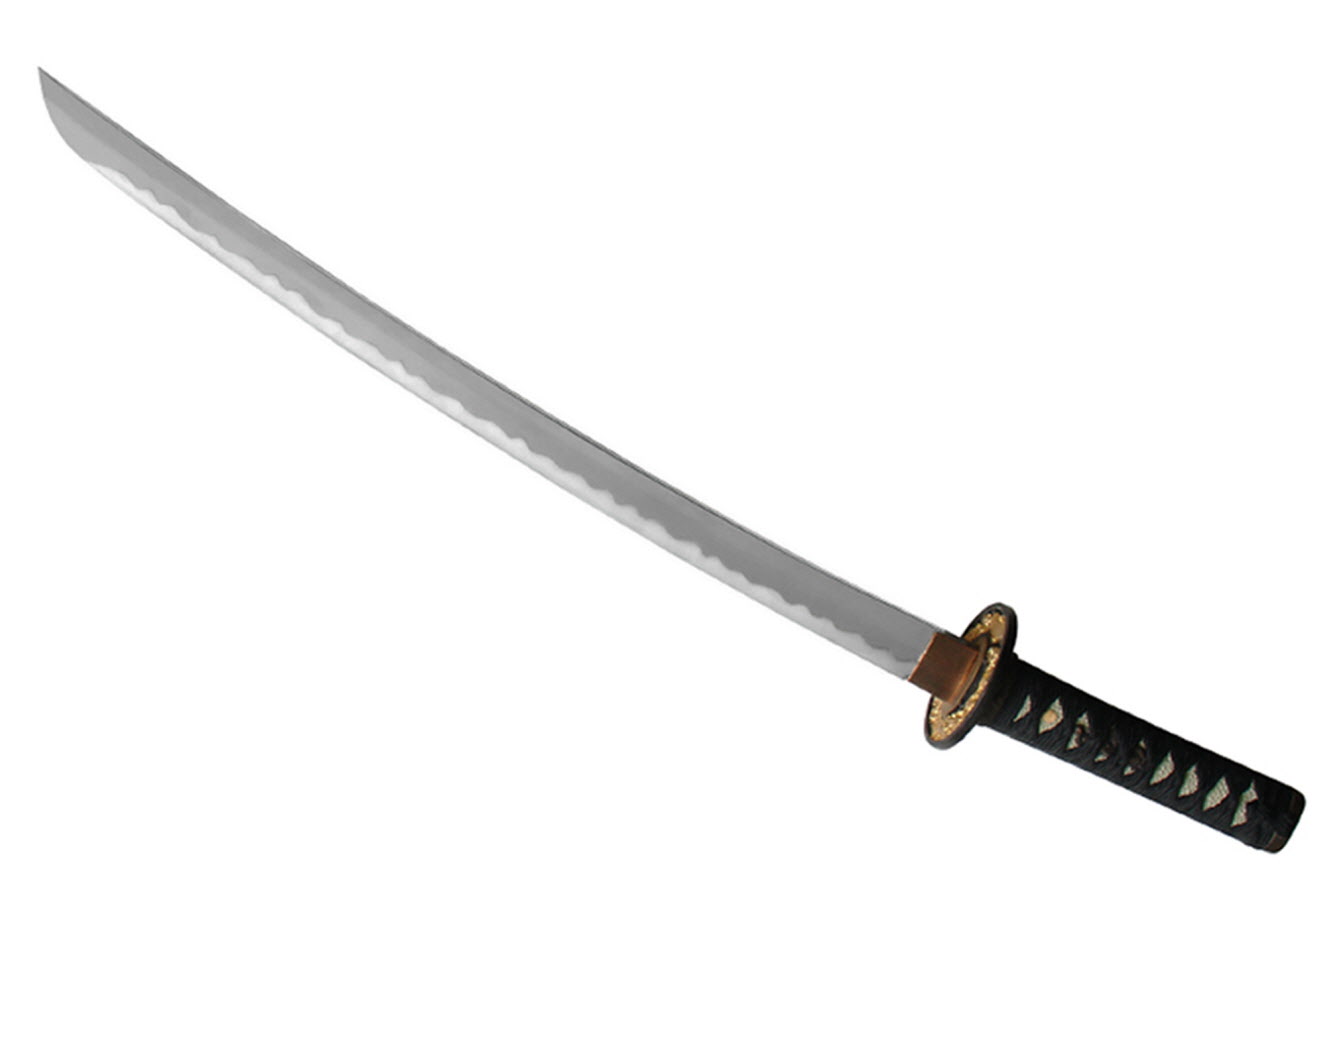 Samurai Sword HD wallpapers, Desktop wallpaper - most viewed